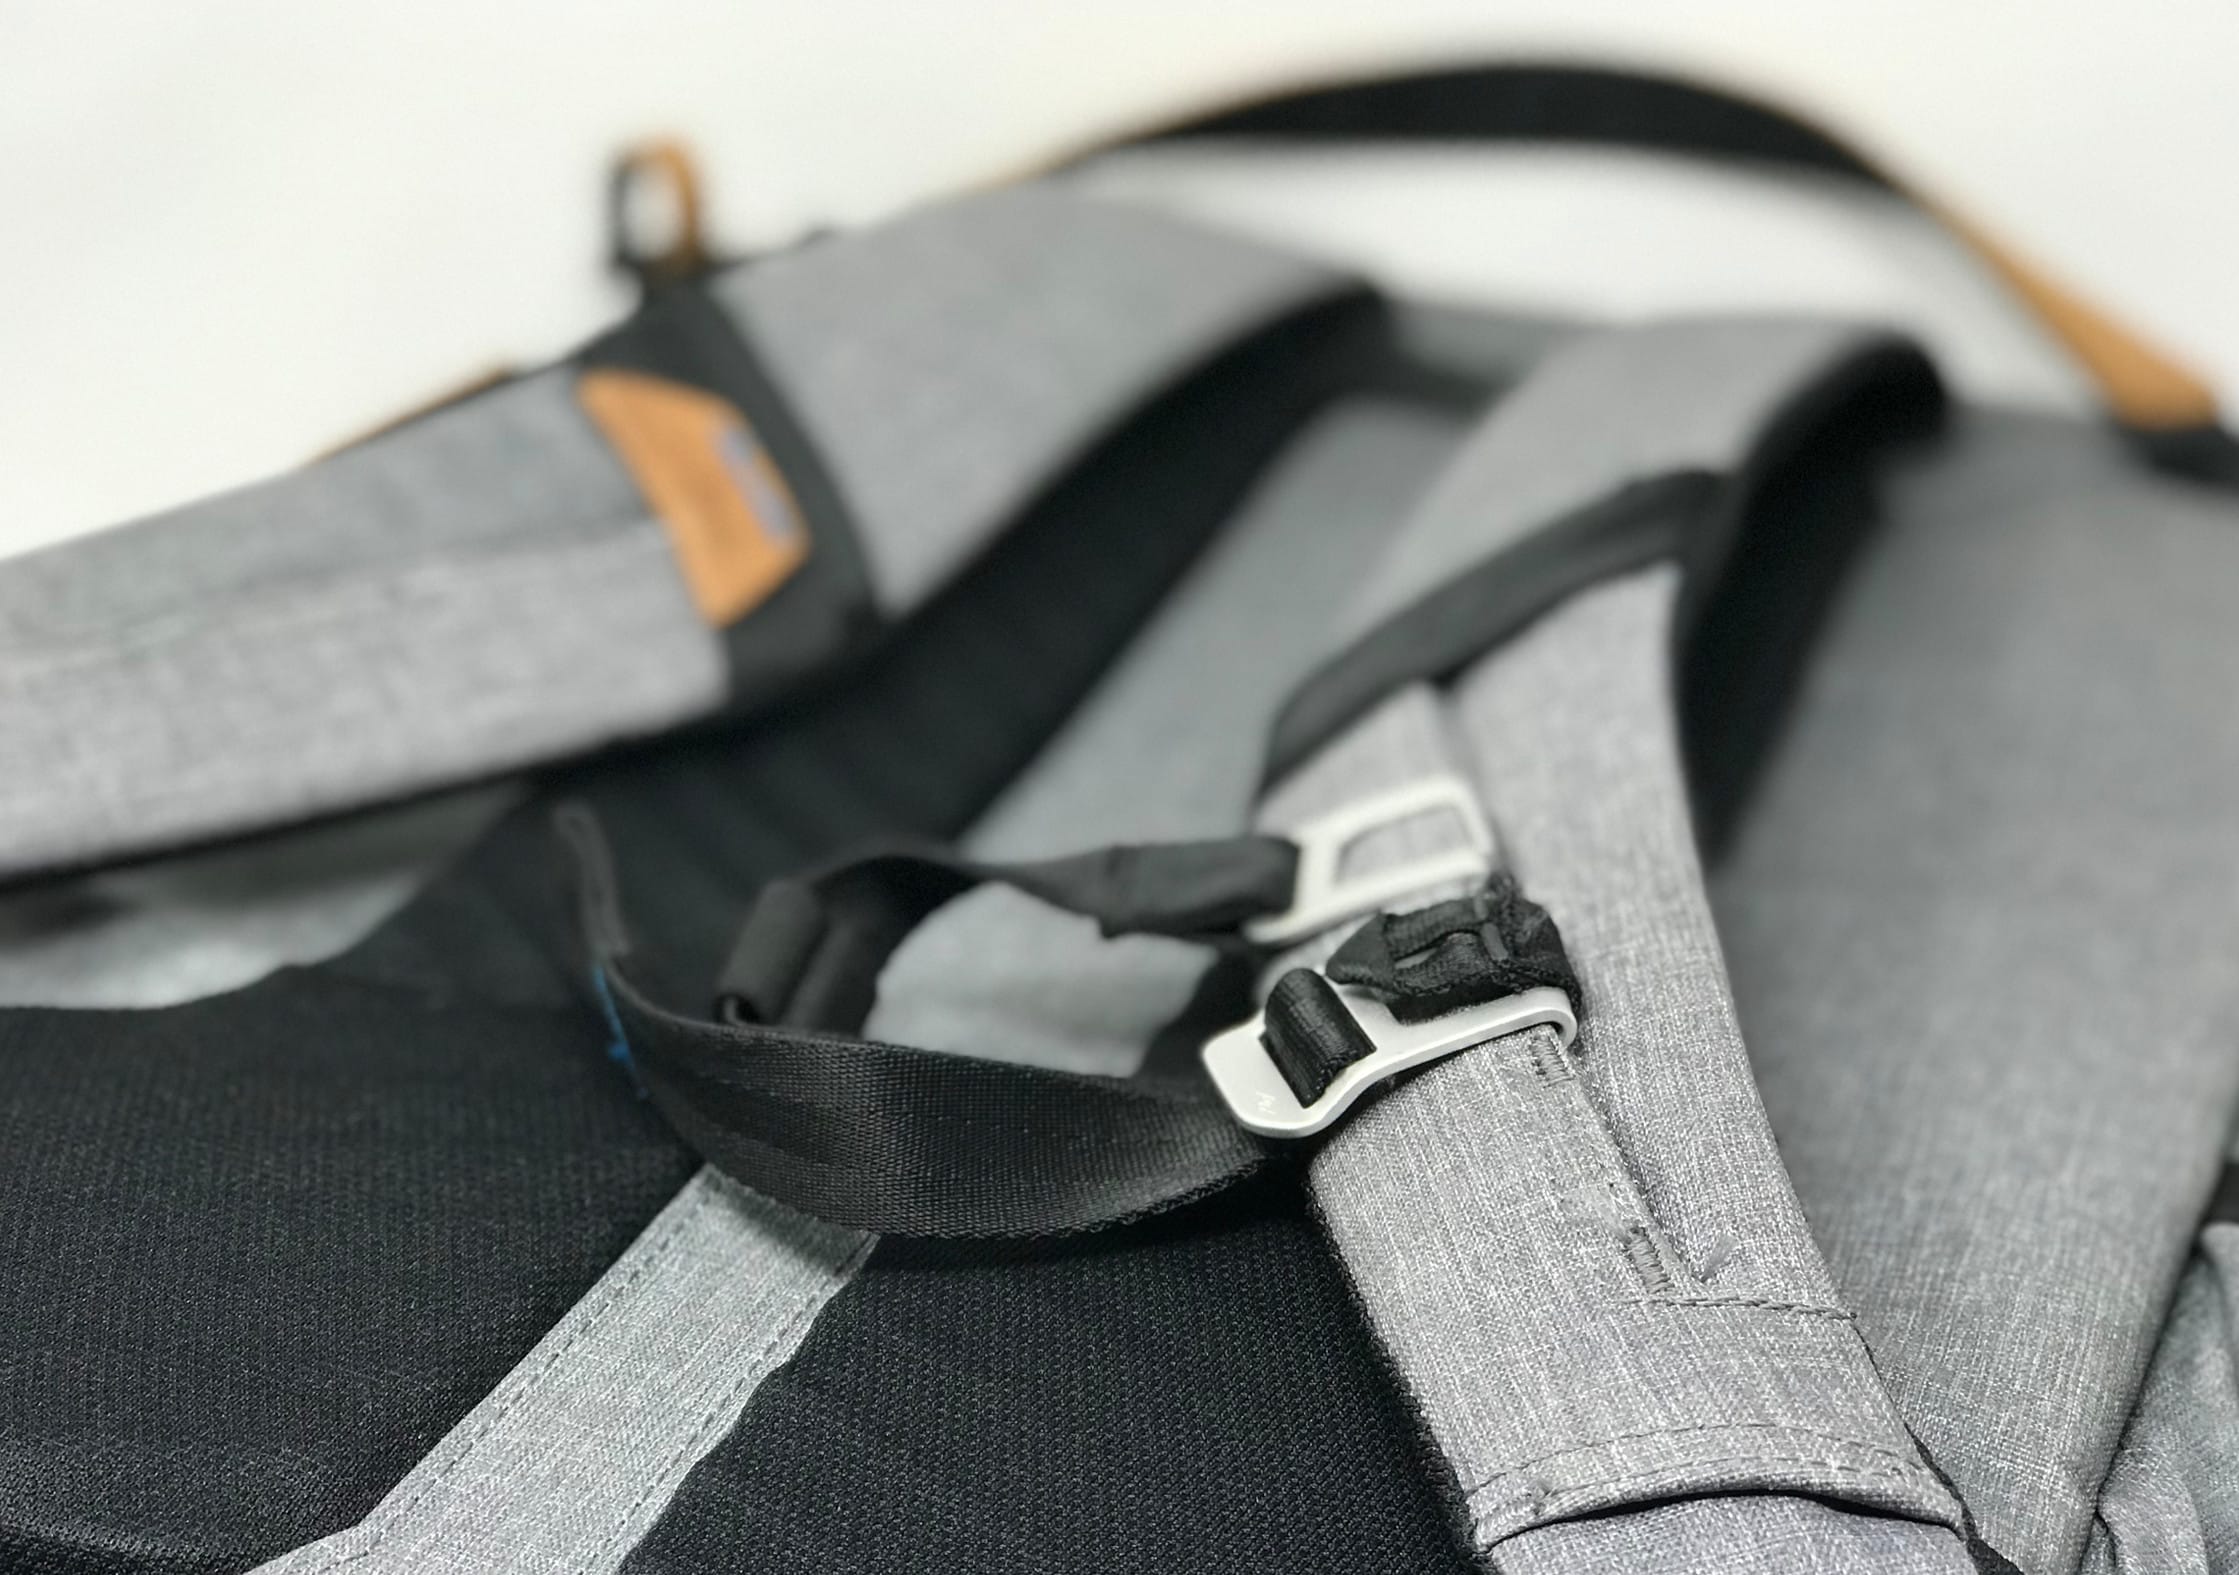 Peak Design Everyday Backpack sternum strap.